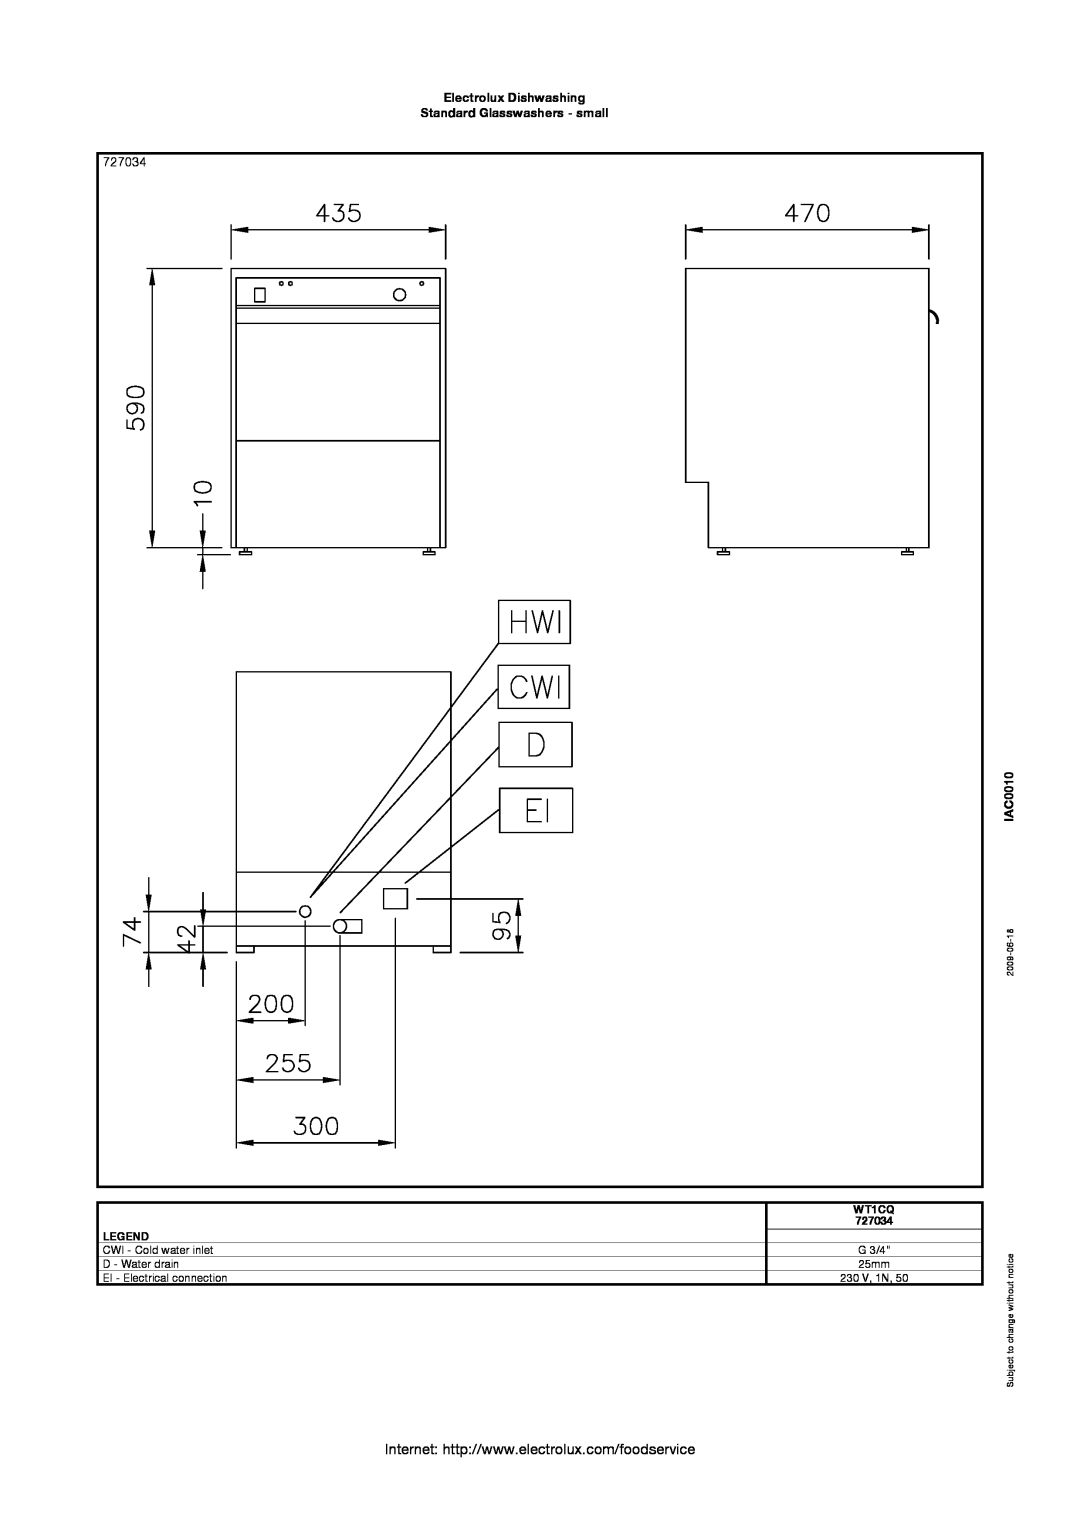 Electrolux WT1CQ, WT1QDD, 727040 manual Electrolux Dishwashing Standard Glasswashers - small, 727034, IAC0010, 2009-06-18 